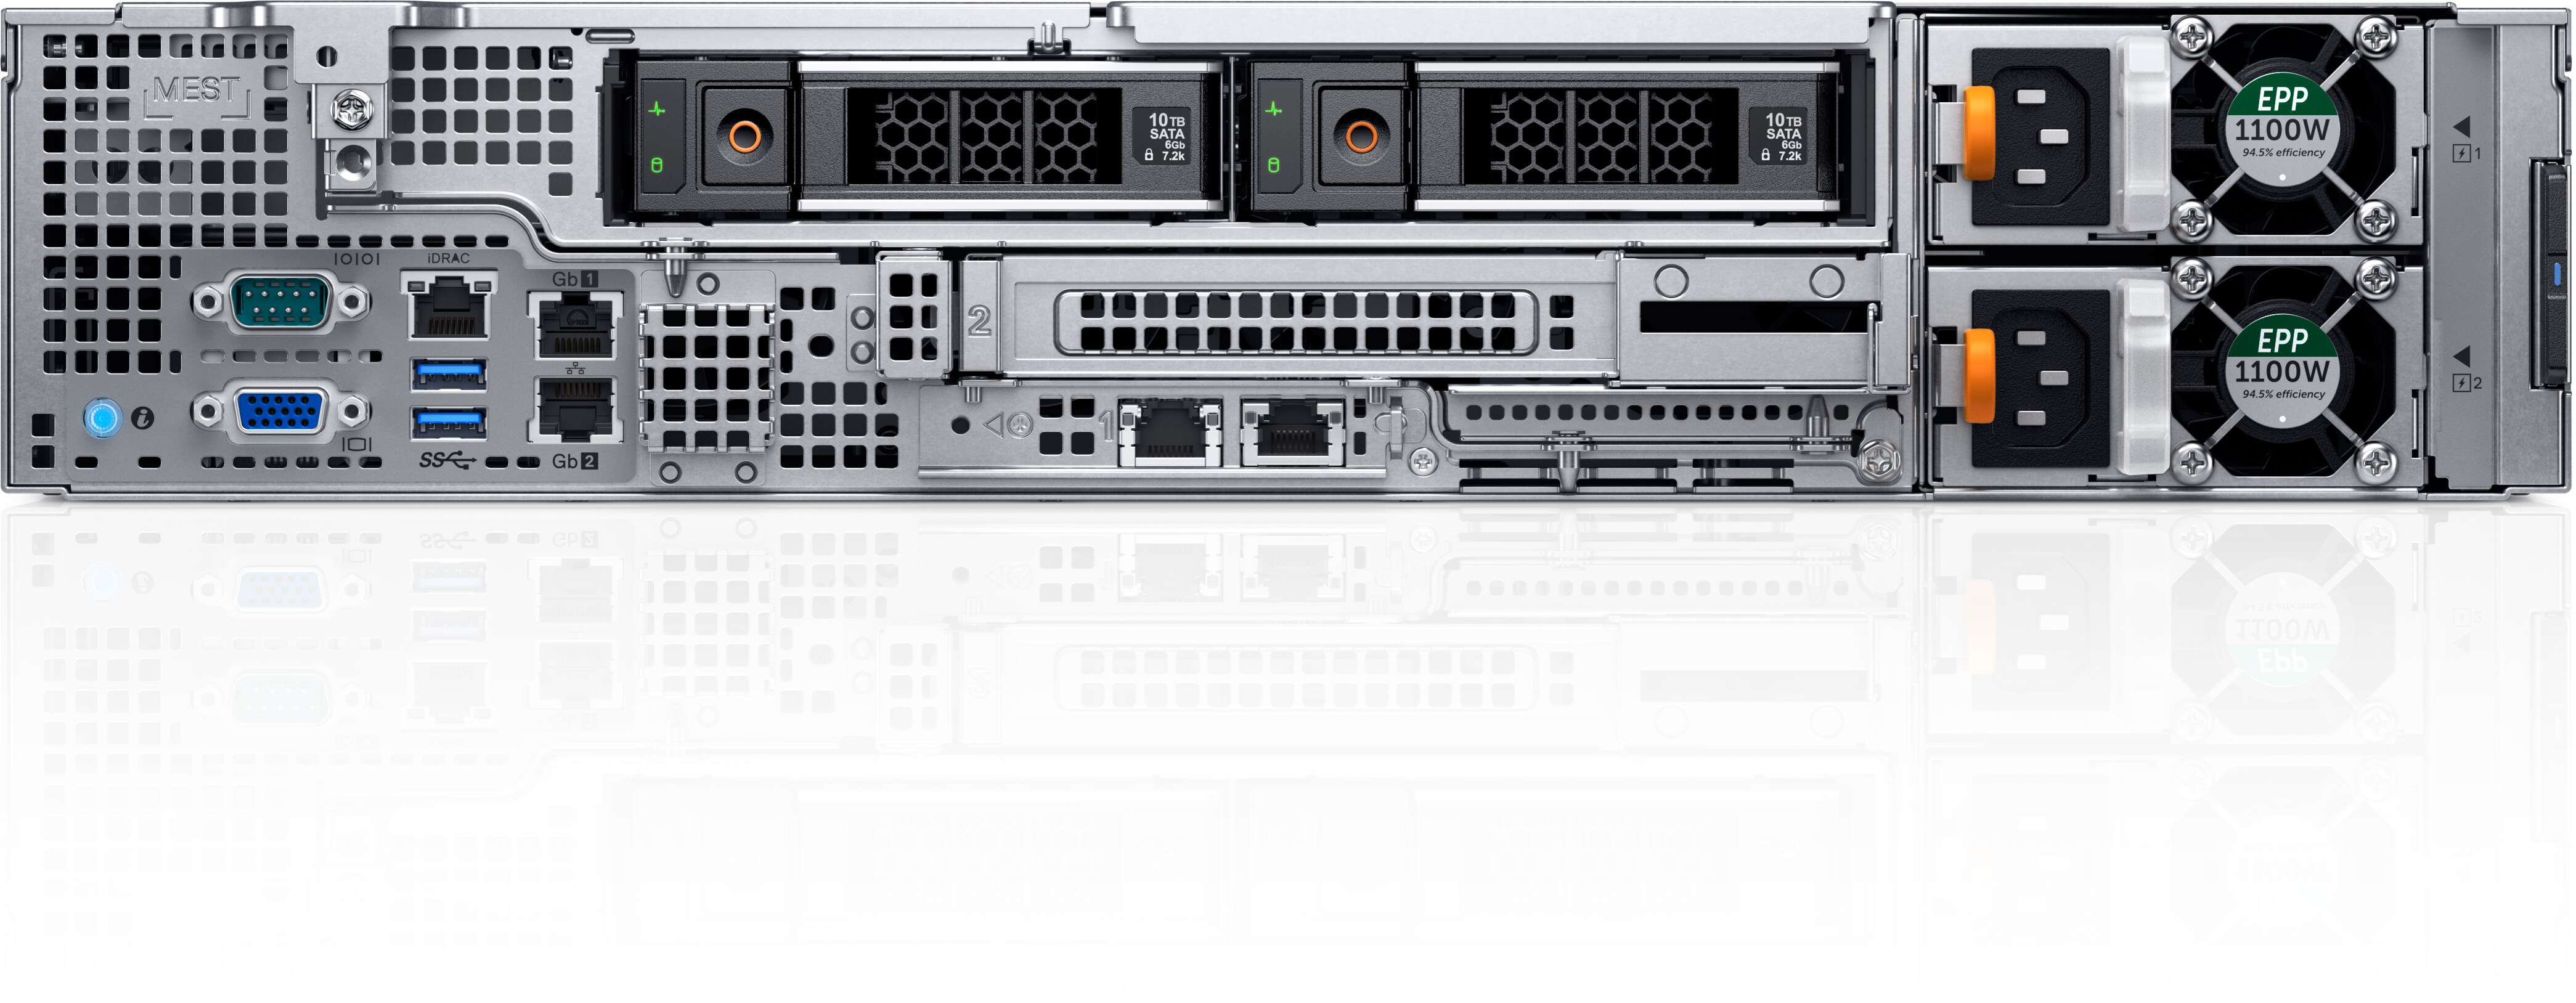 Dell EMC PowerEdge R740xd2ラックサーバー | Dell 日本